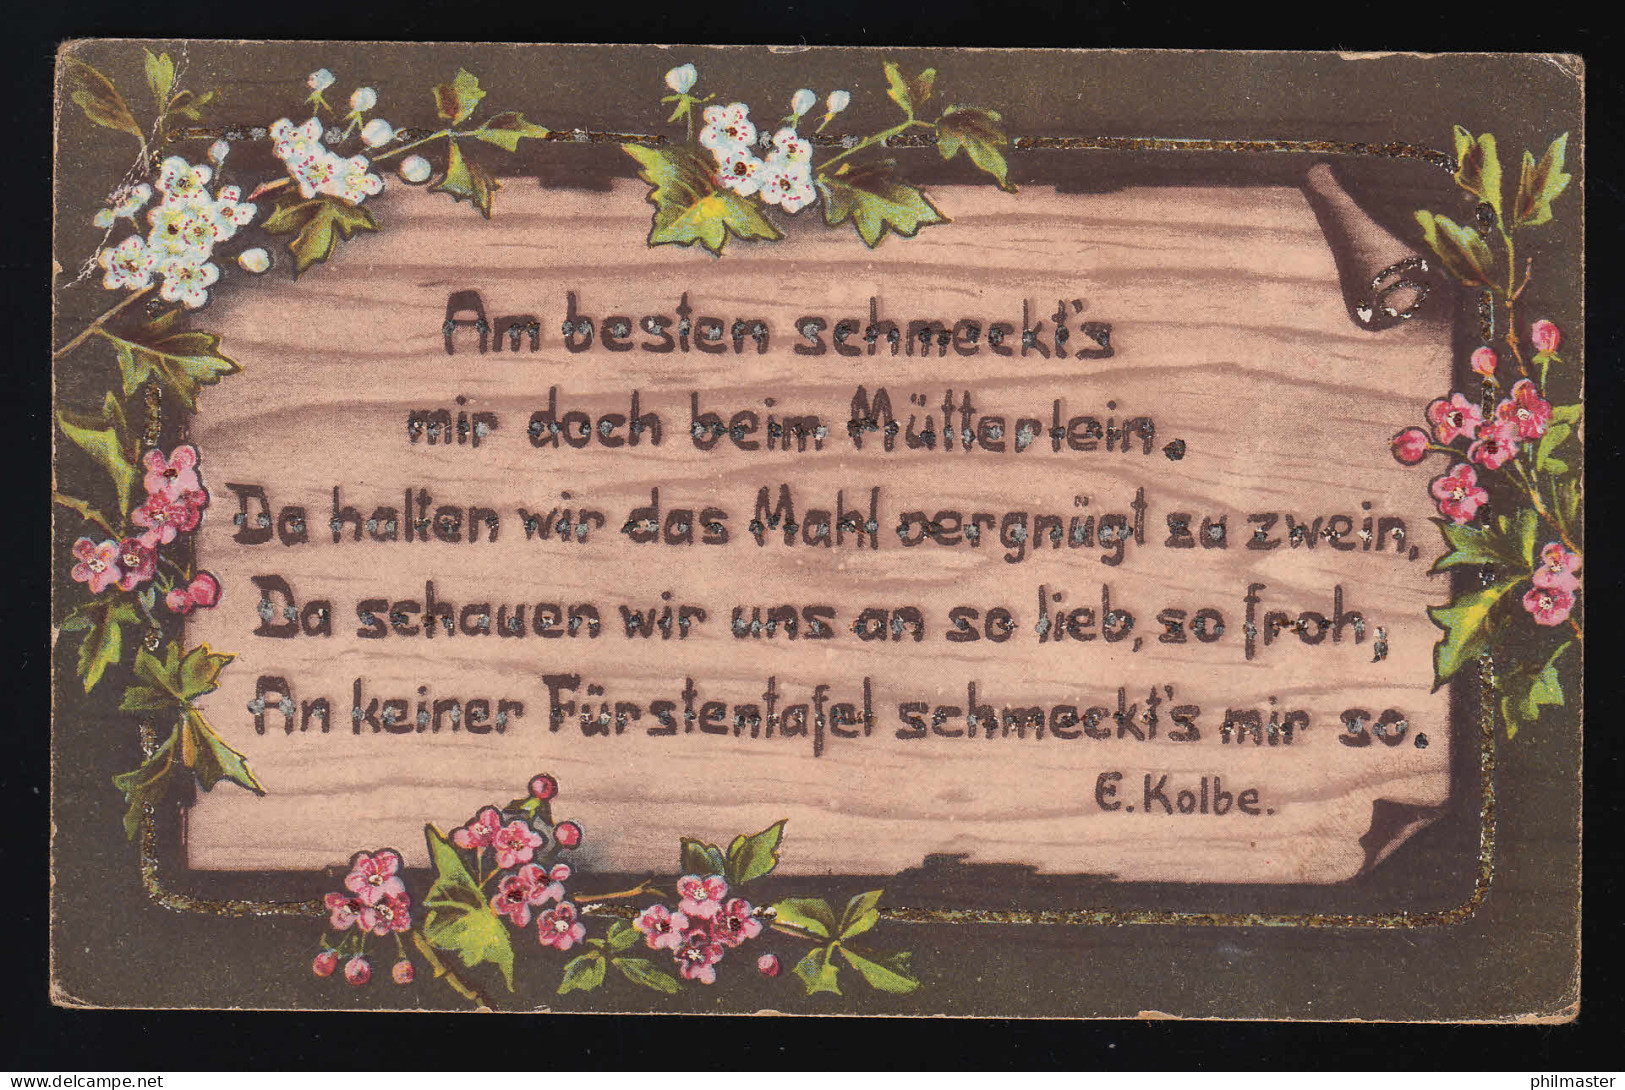 Am Besten Schmeckt's Mir Doch Beim Mütterlein, Text E.Kolbe Blumen, Ungebraucht - Mother's Day